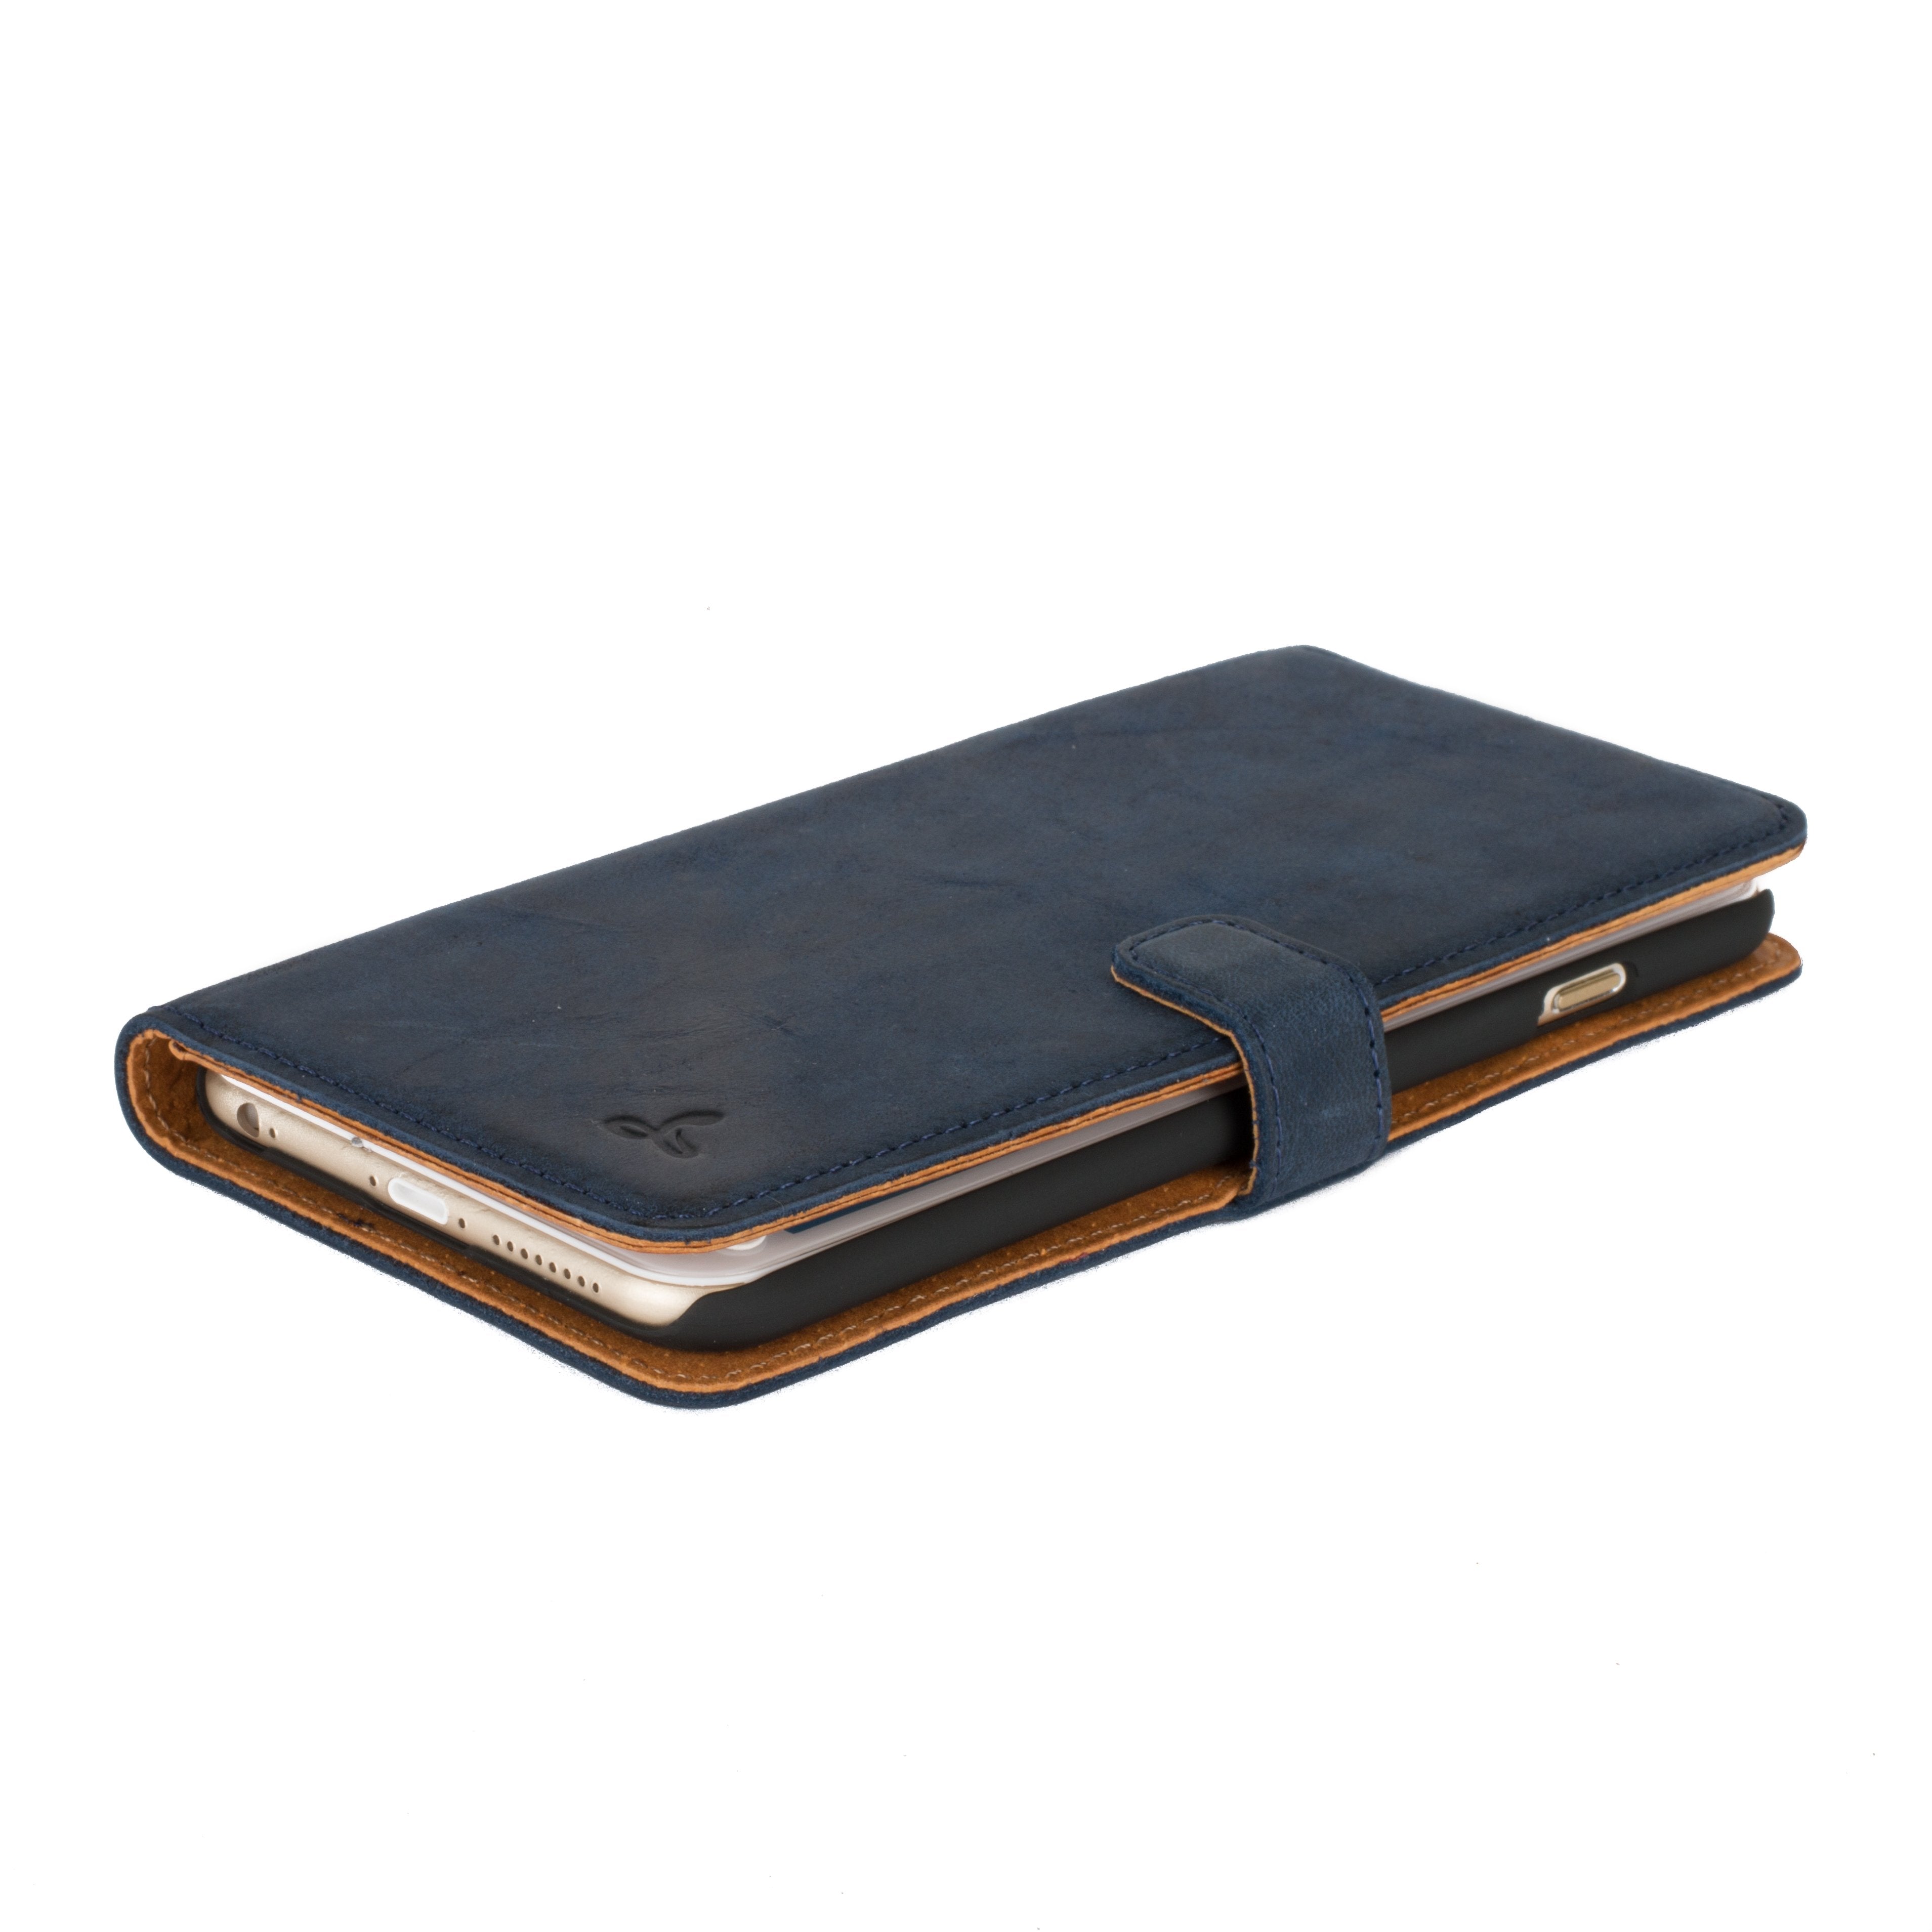 Vintage Leather Wallet - Apple iPhone 6/6S Plus